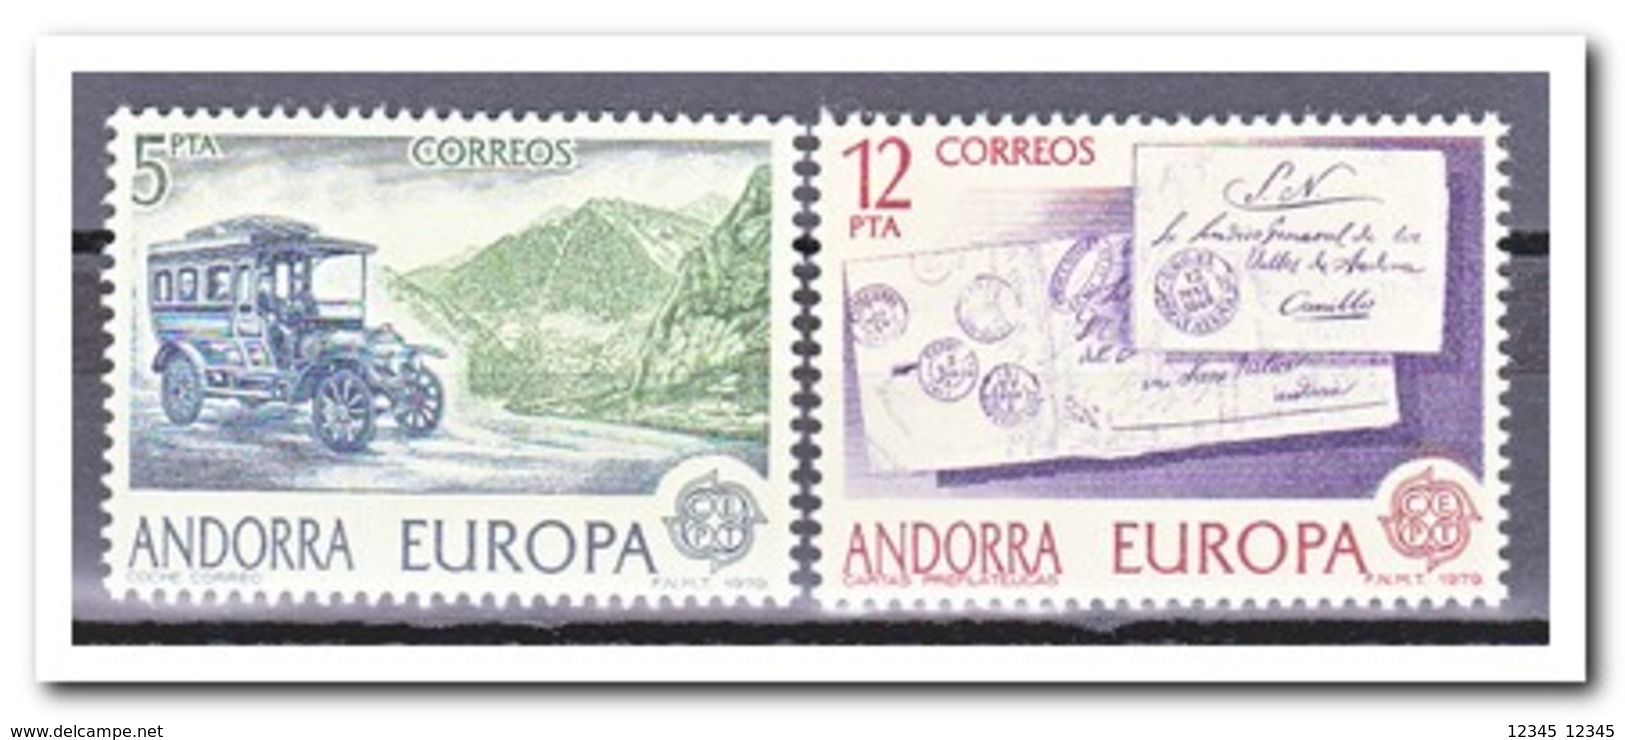 Spaans Andorra 1979, Postfris MNH, Europe, Post - Nuovi